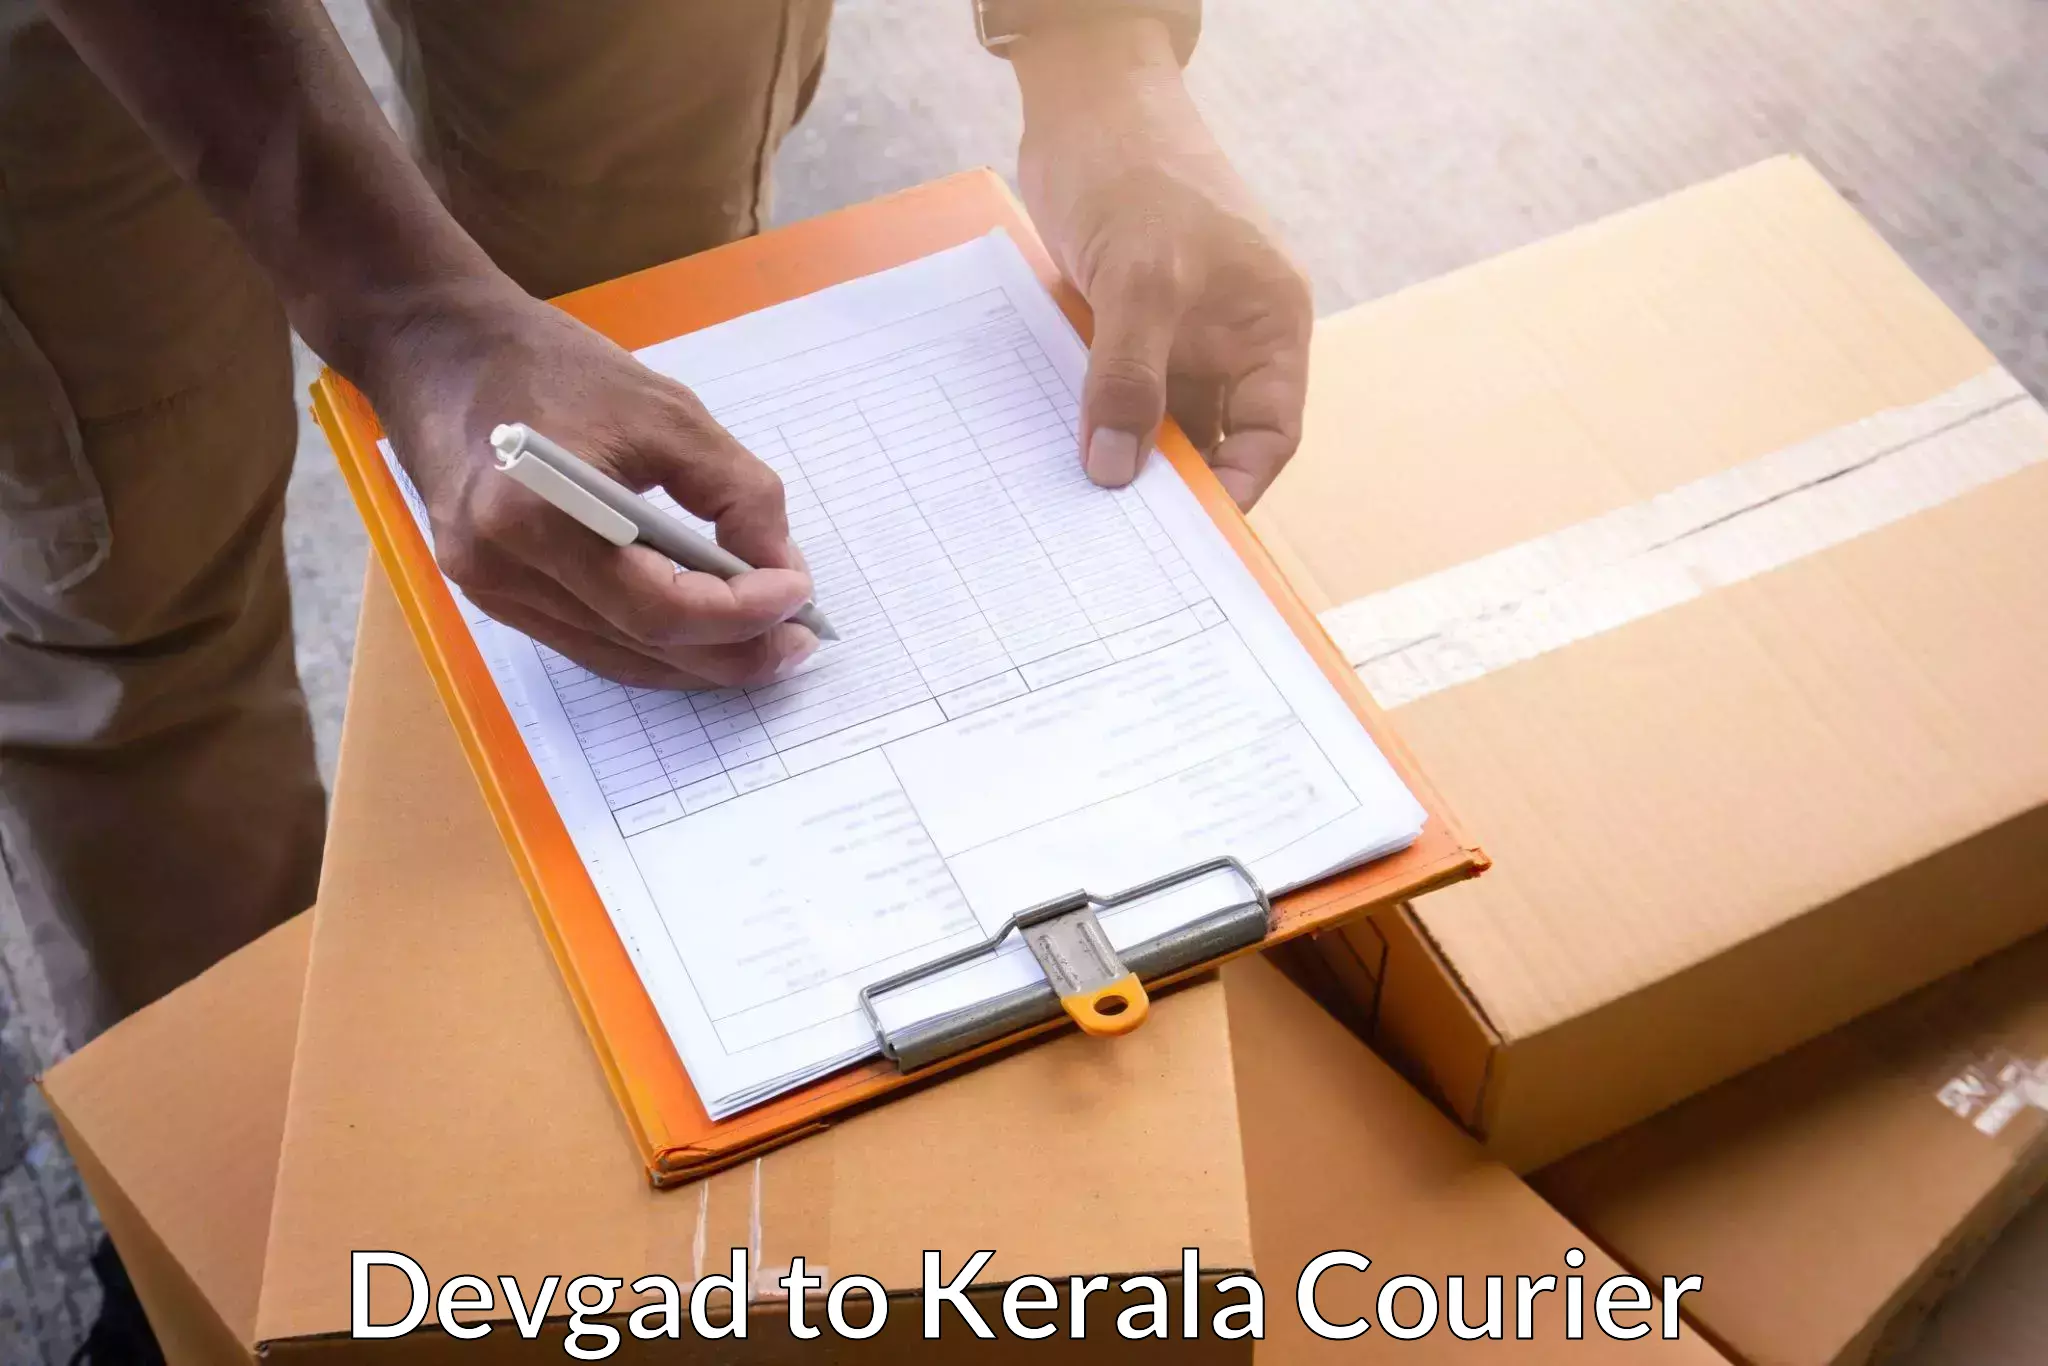 Logistics efficiency Devgad to Parappa